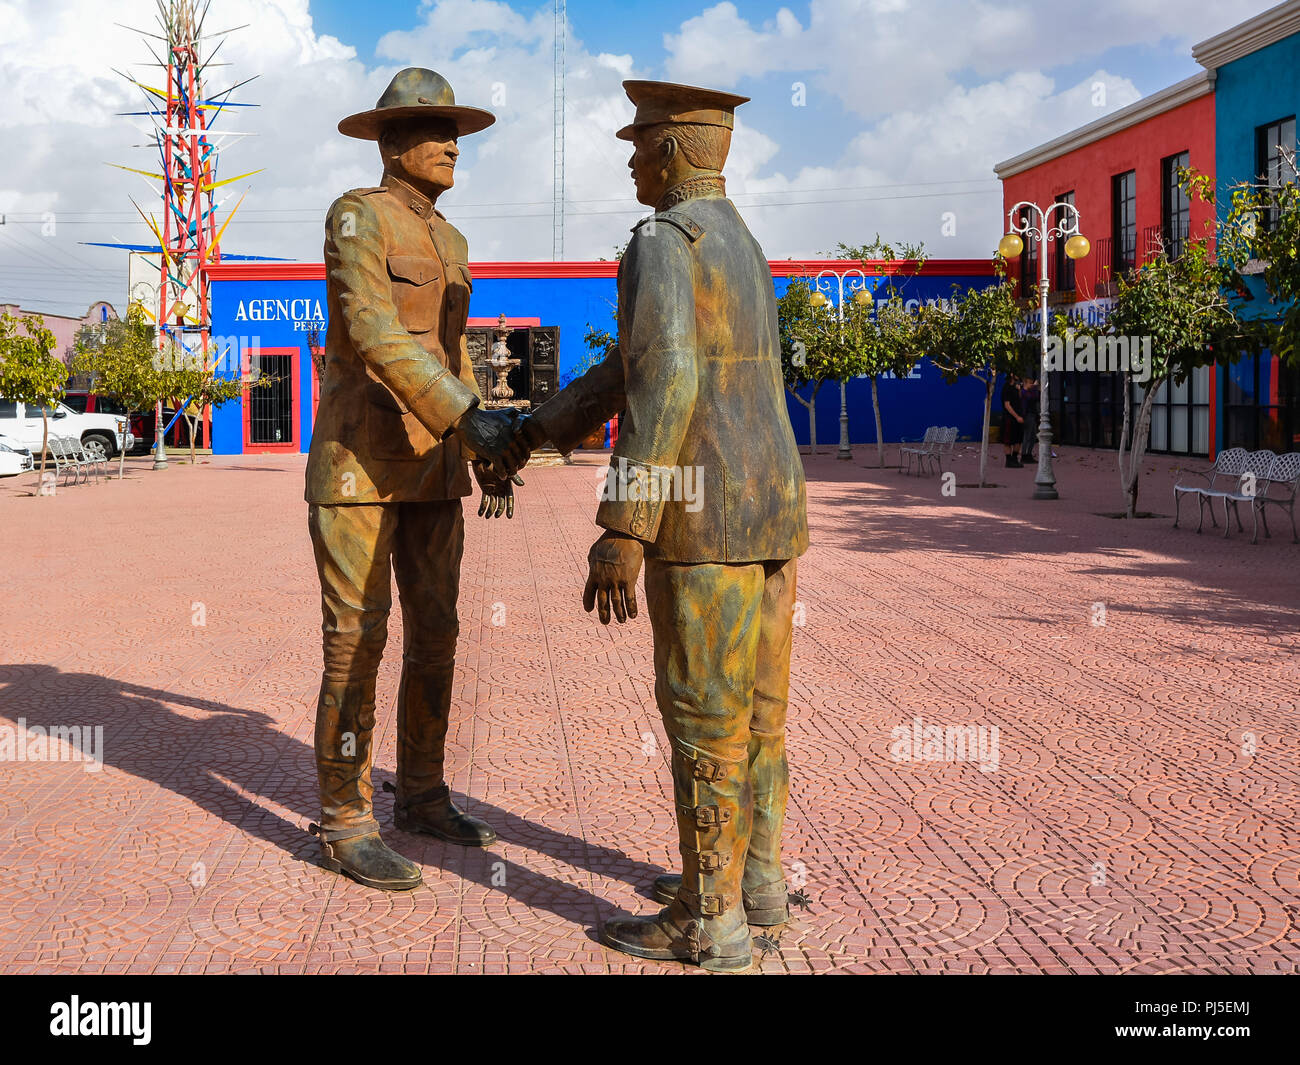 Puerto Palomas, Mexiko - November 4, 2016: Statue des Generals John Pershing und Pancho Villa die Hände schütteln. Stockfoto